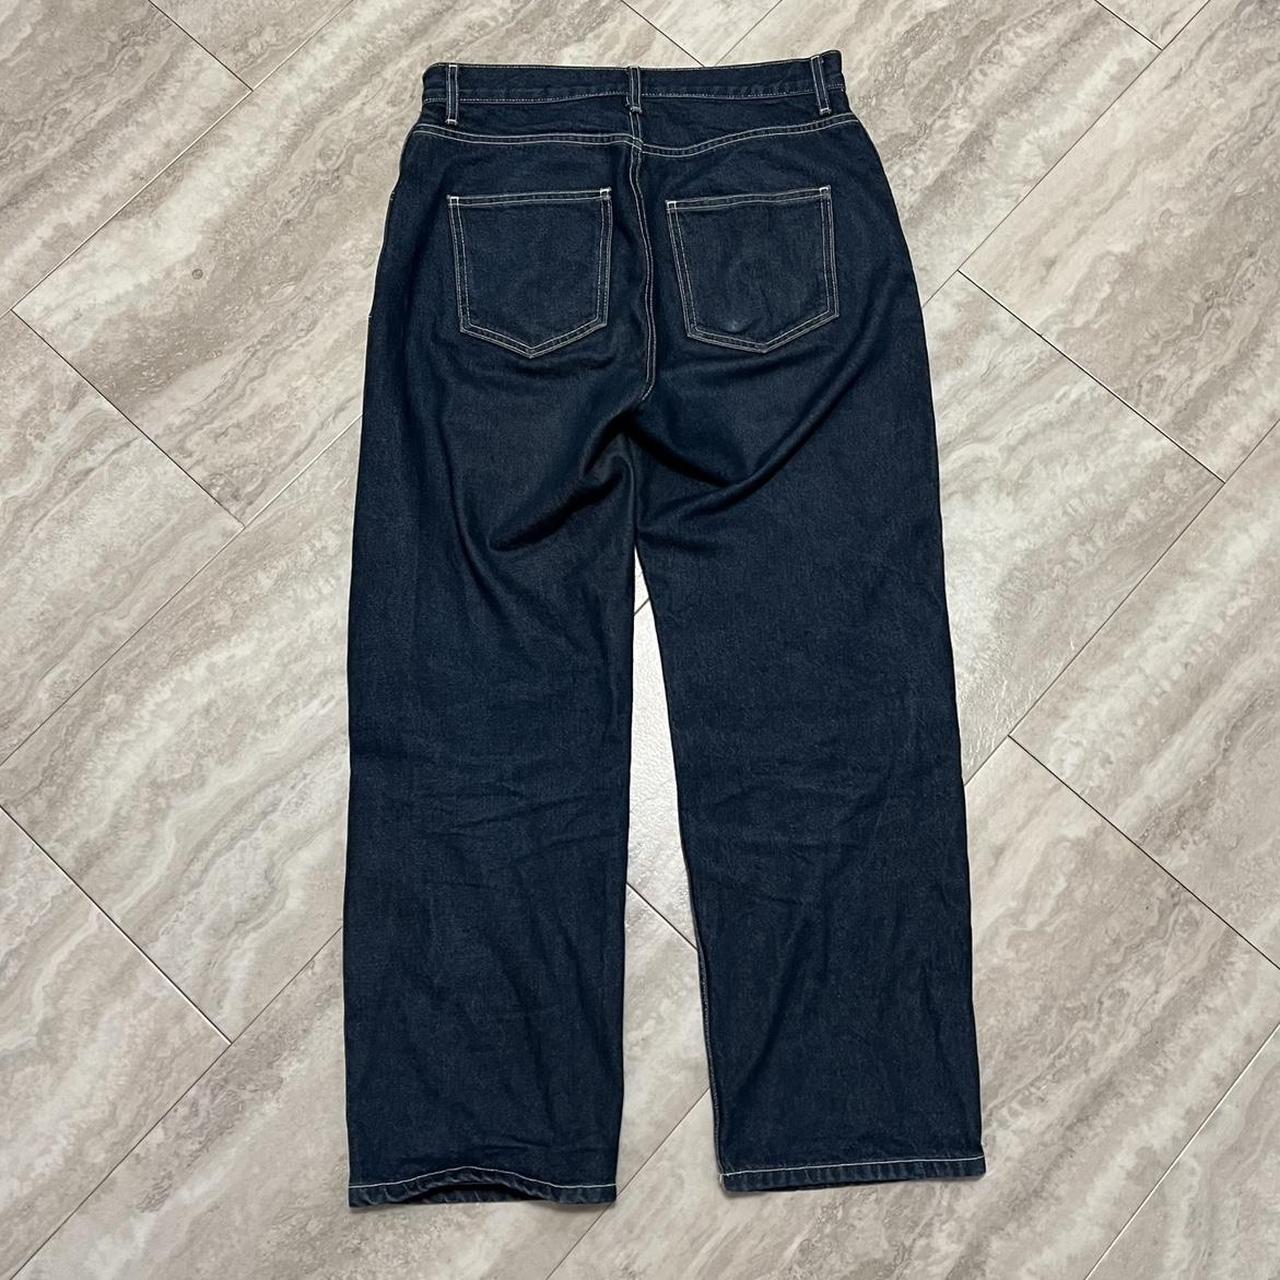 Rudy Jude Classic Indigo Utility Jeans in Size 3... - Depop